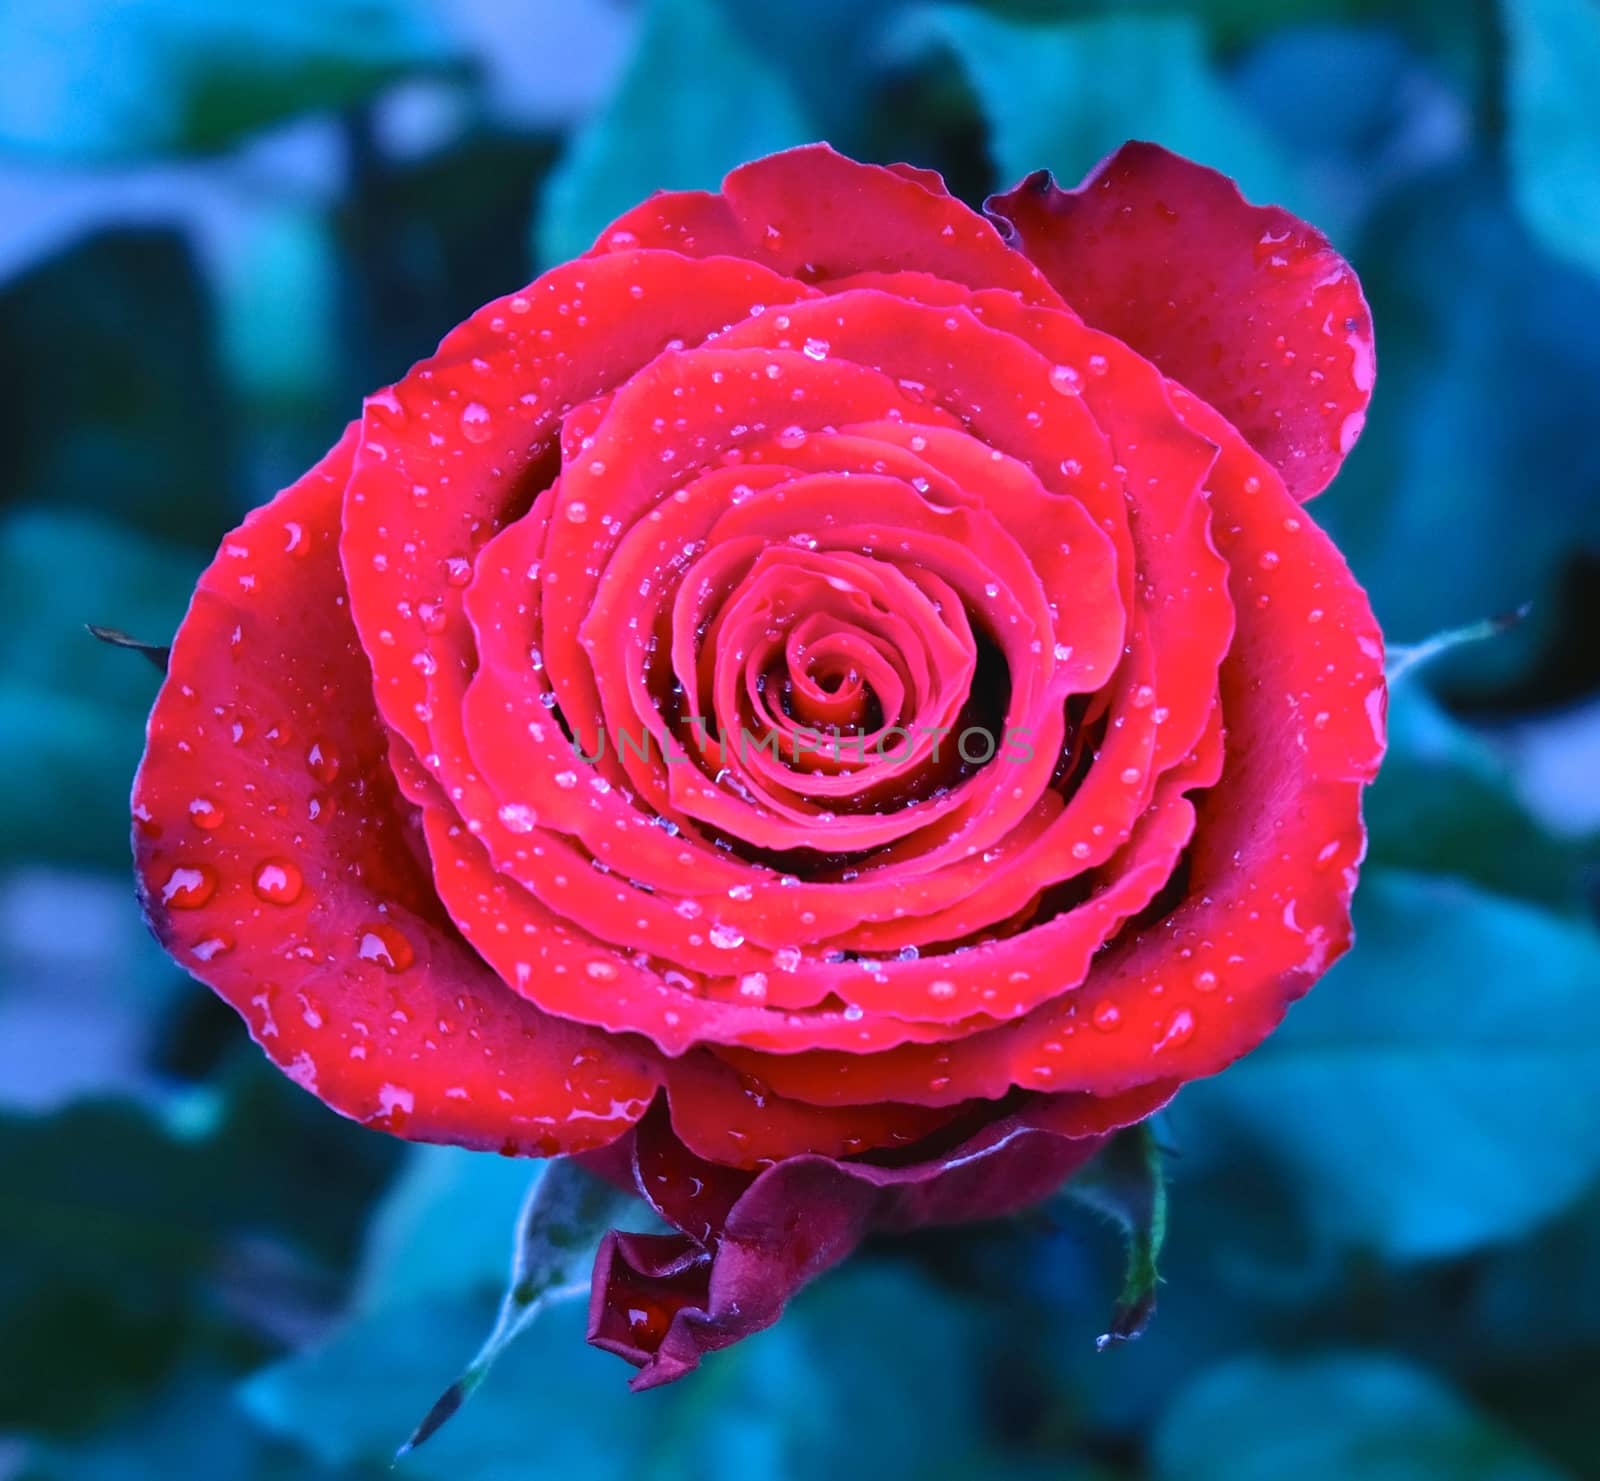 Red rose by Afoto